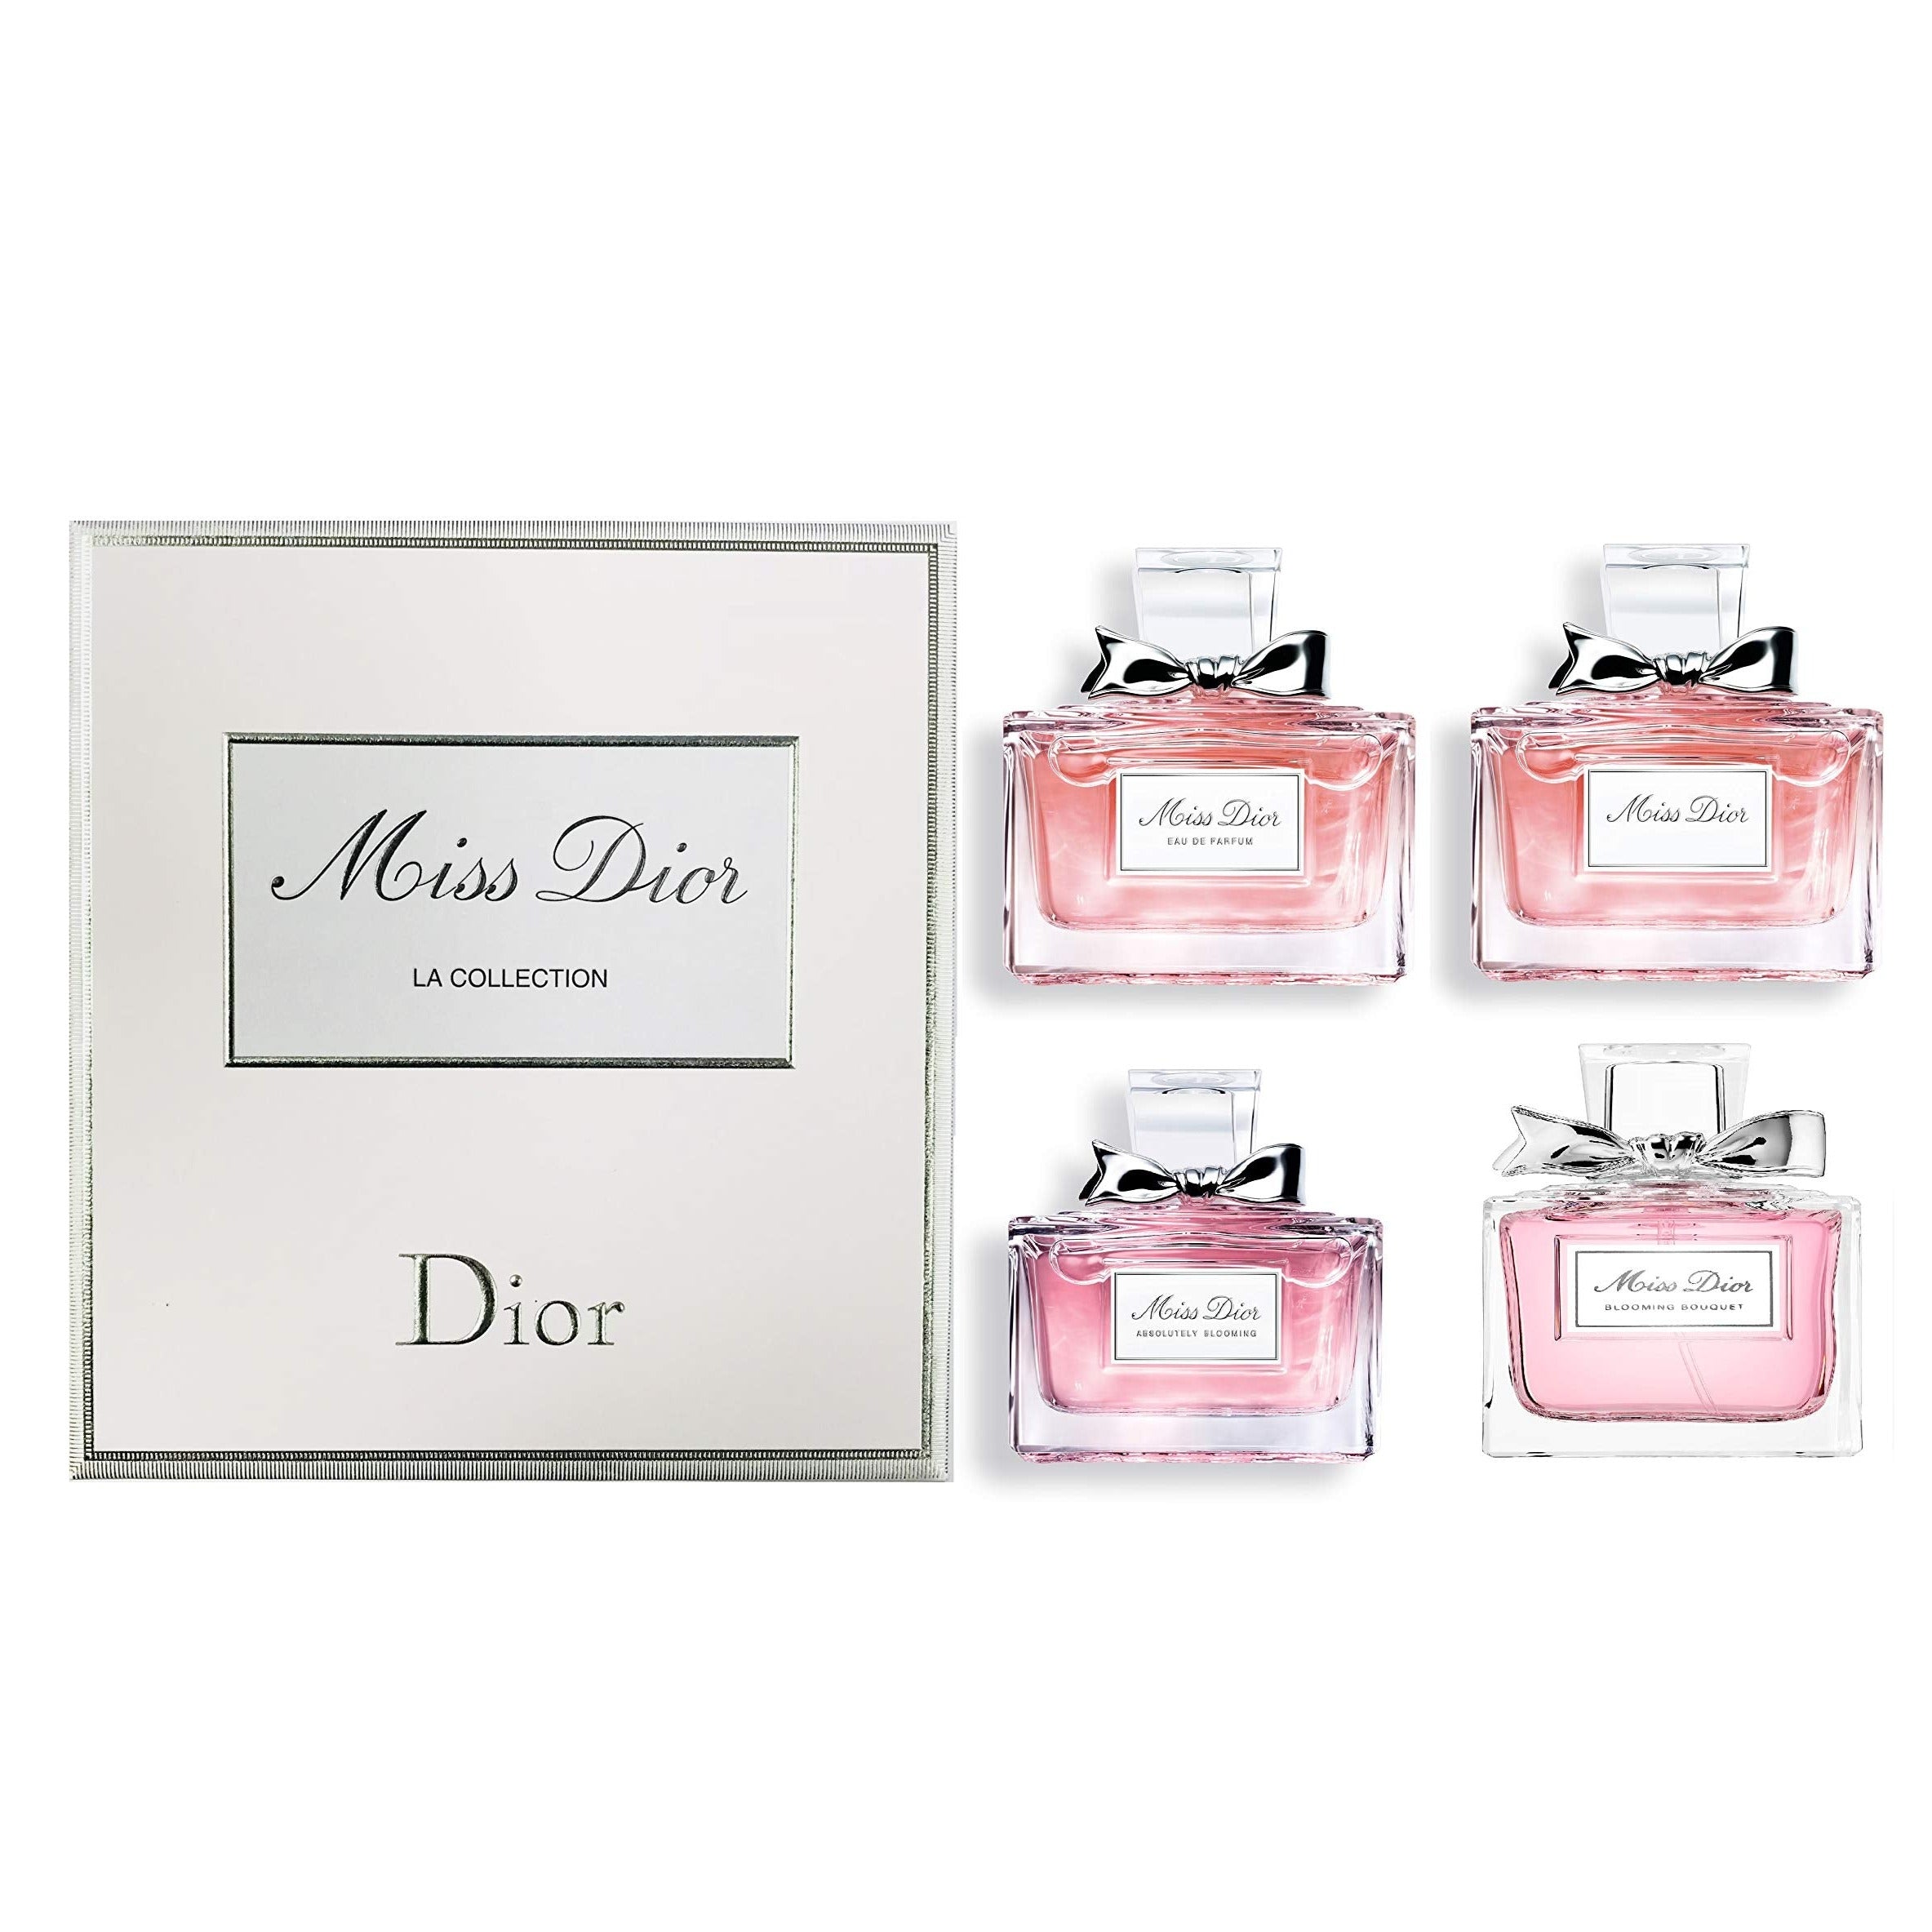 Dior Les Parfums De Dior Travel Collection  eBay